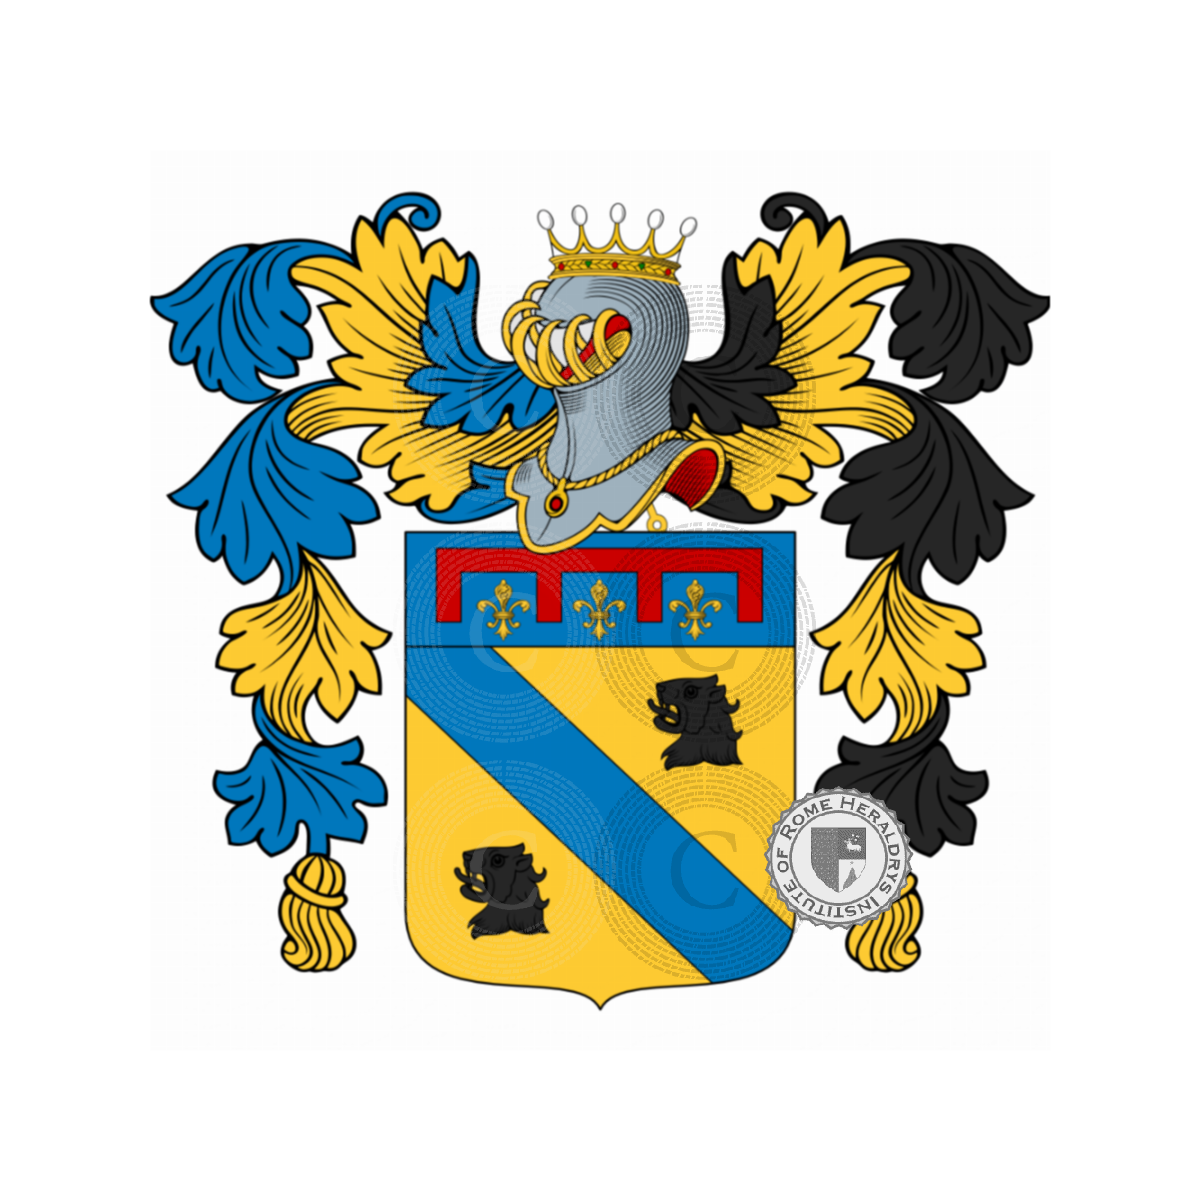 Coat of arms of familyMondini